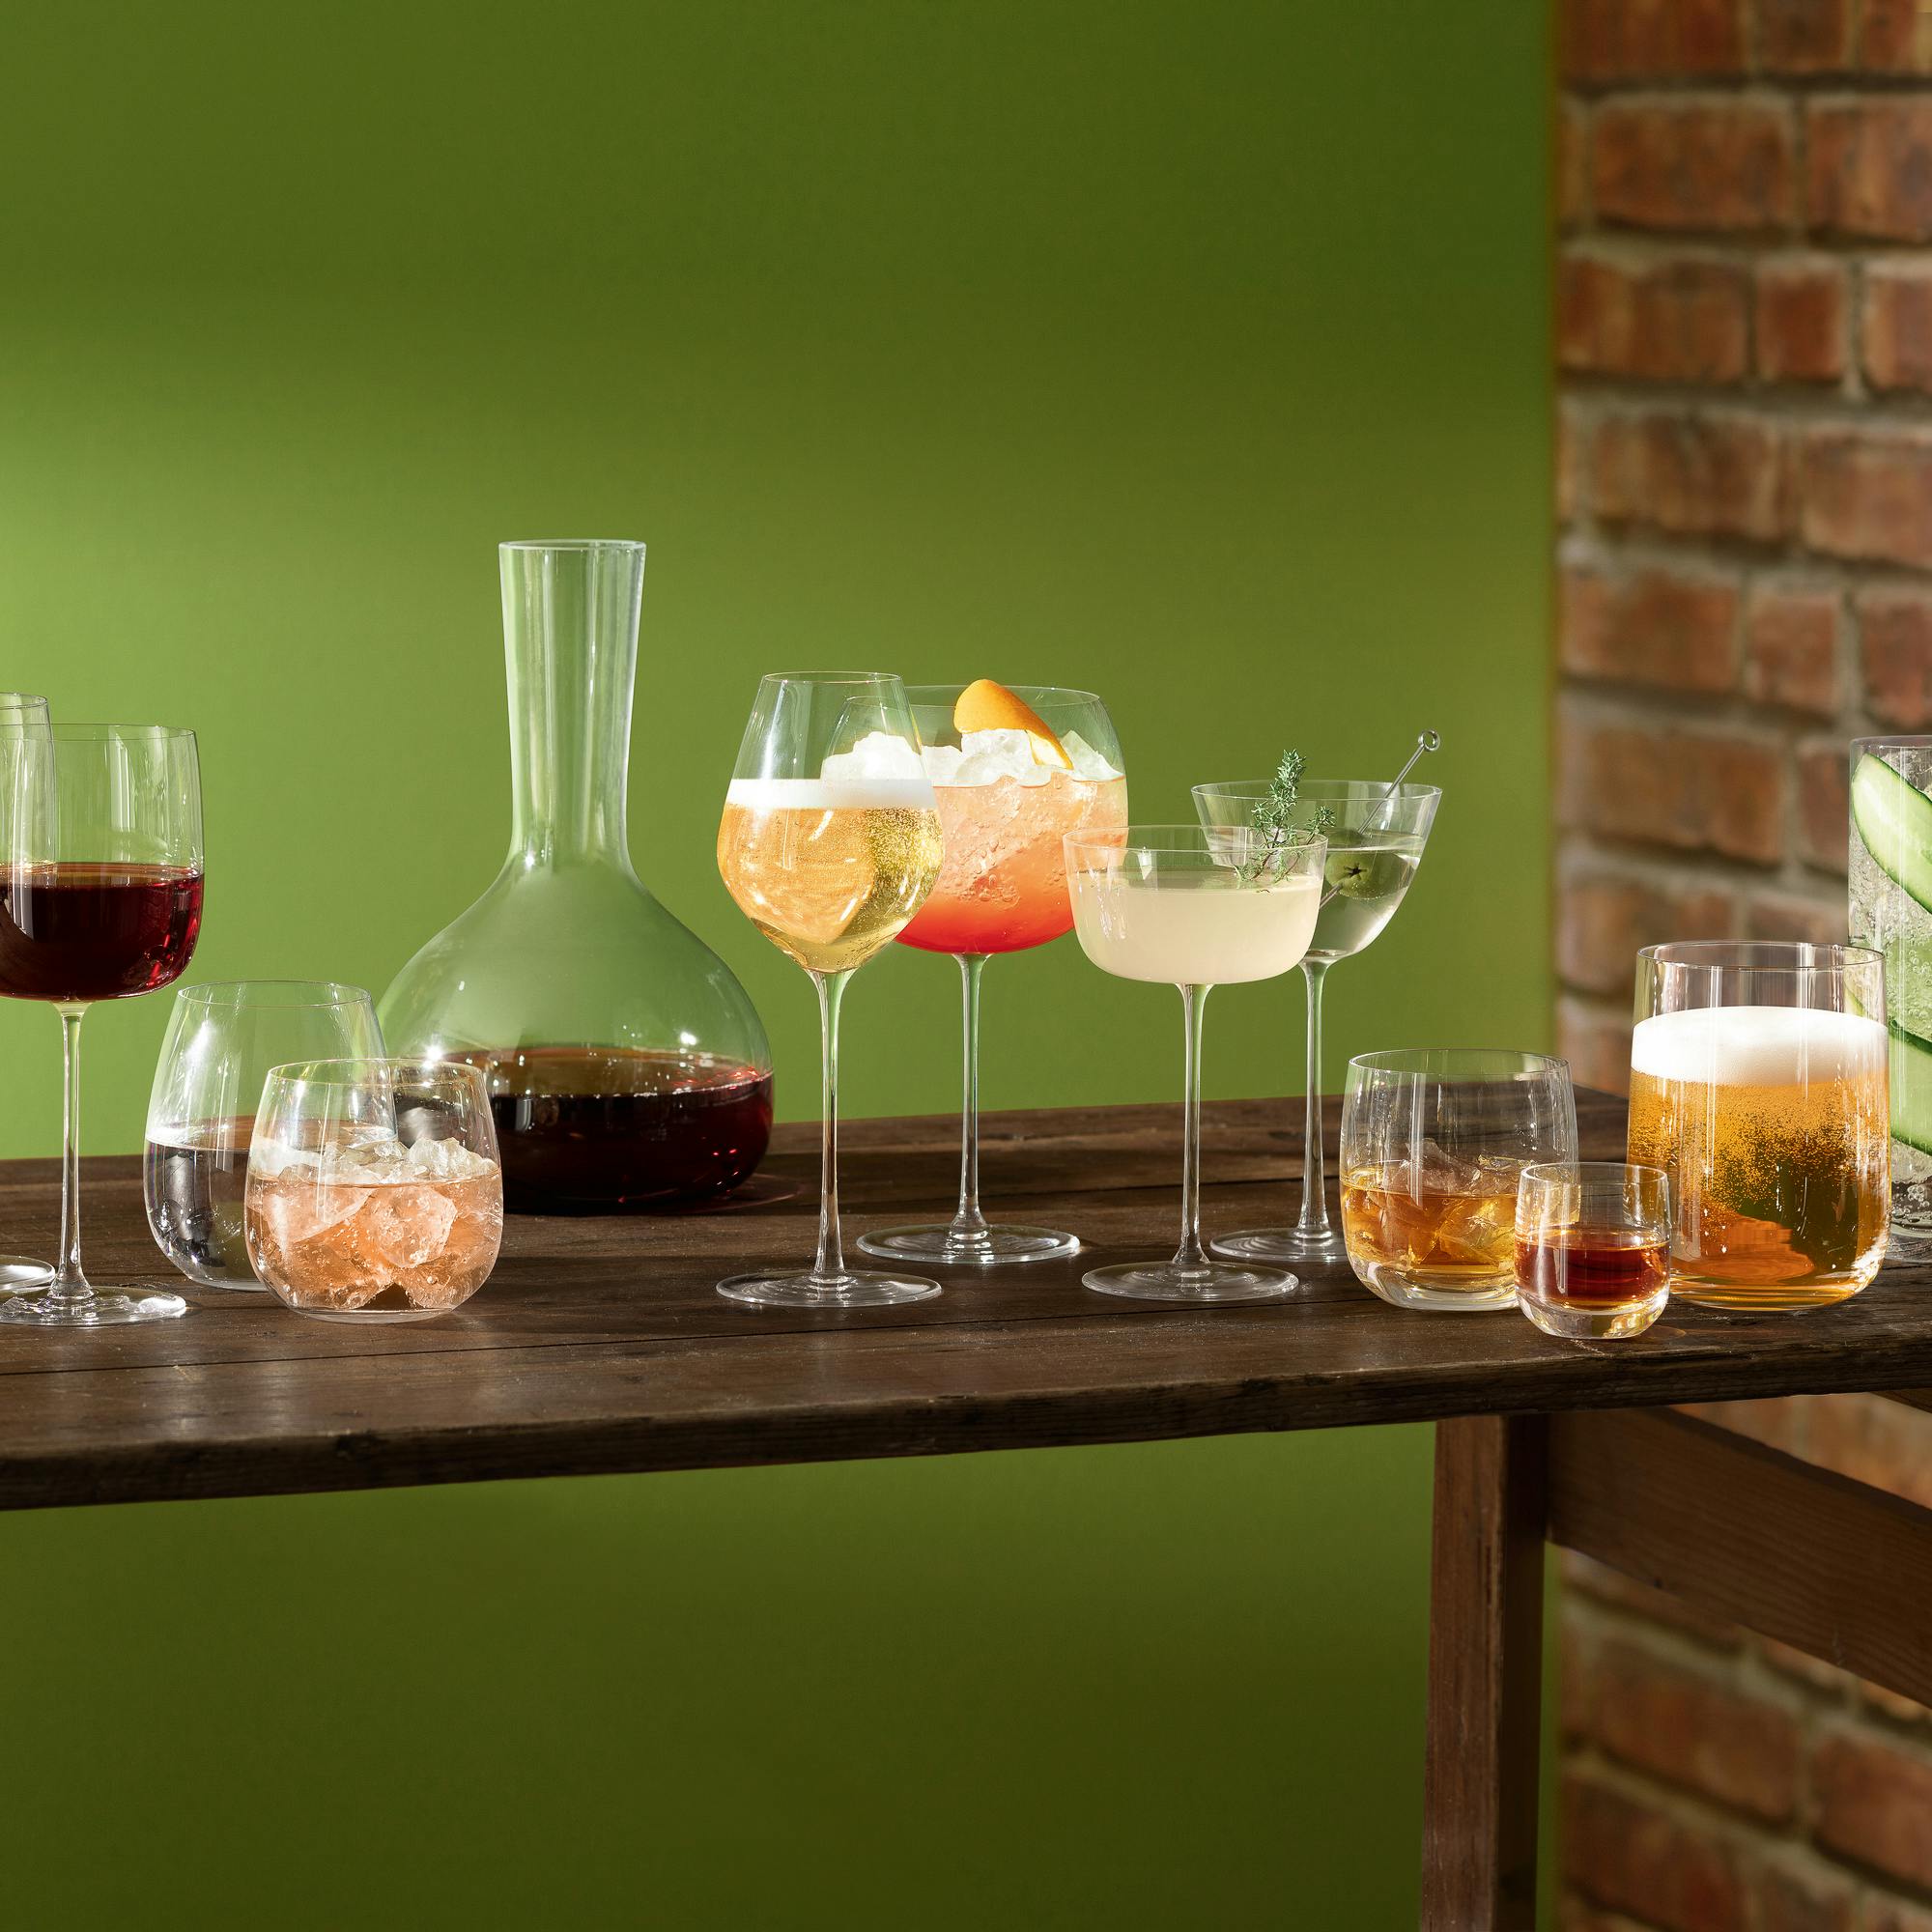 LSA Bar Martini Glass Set of 2